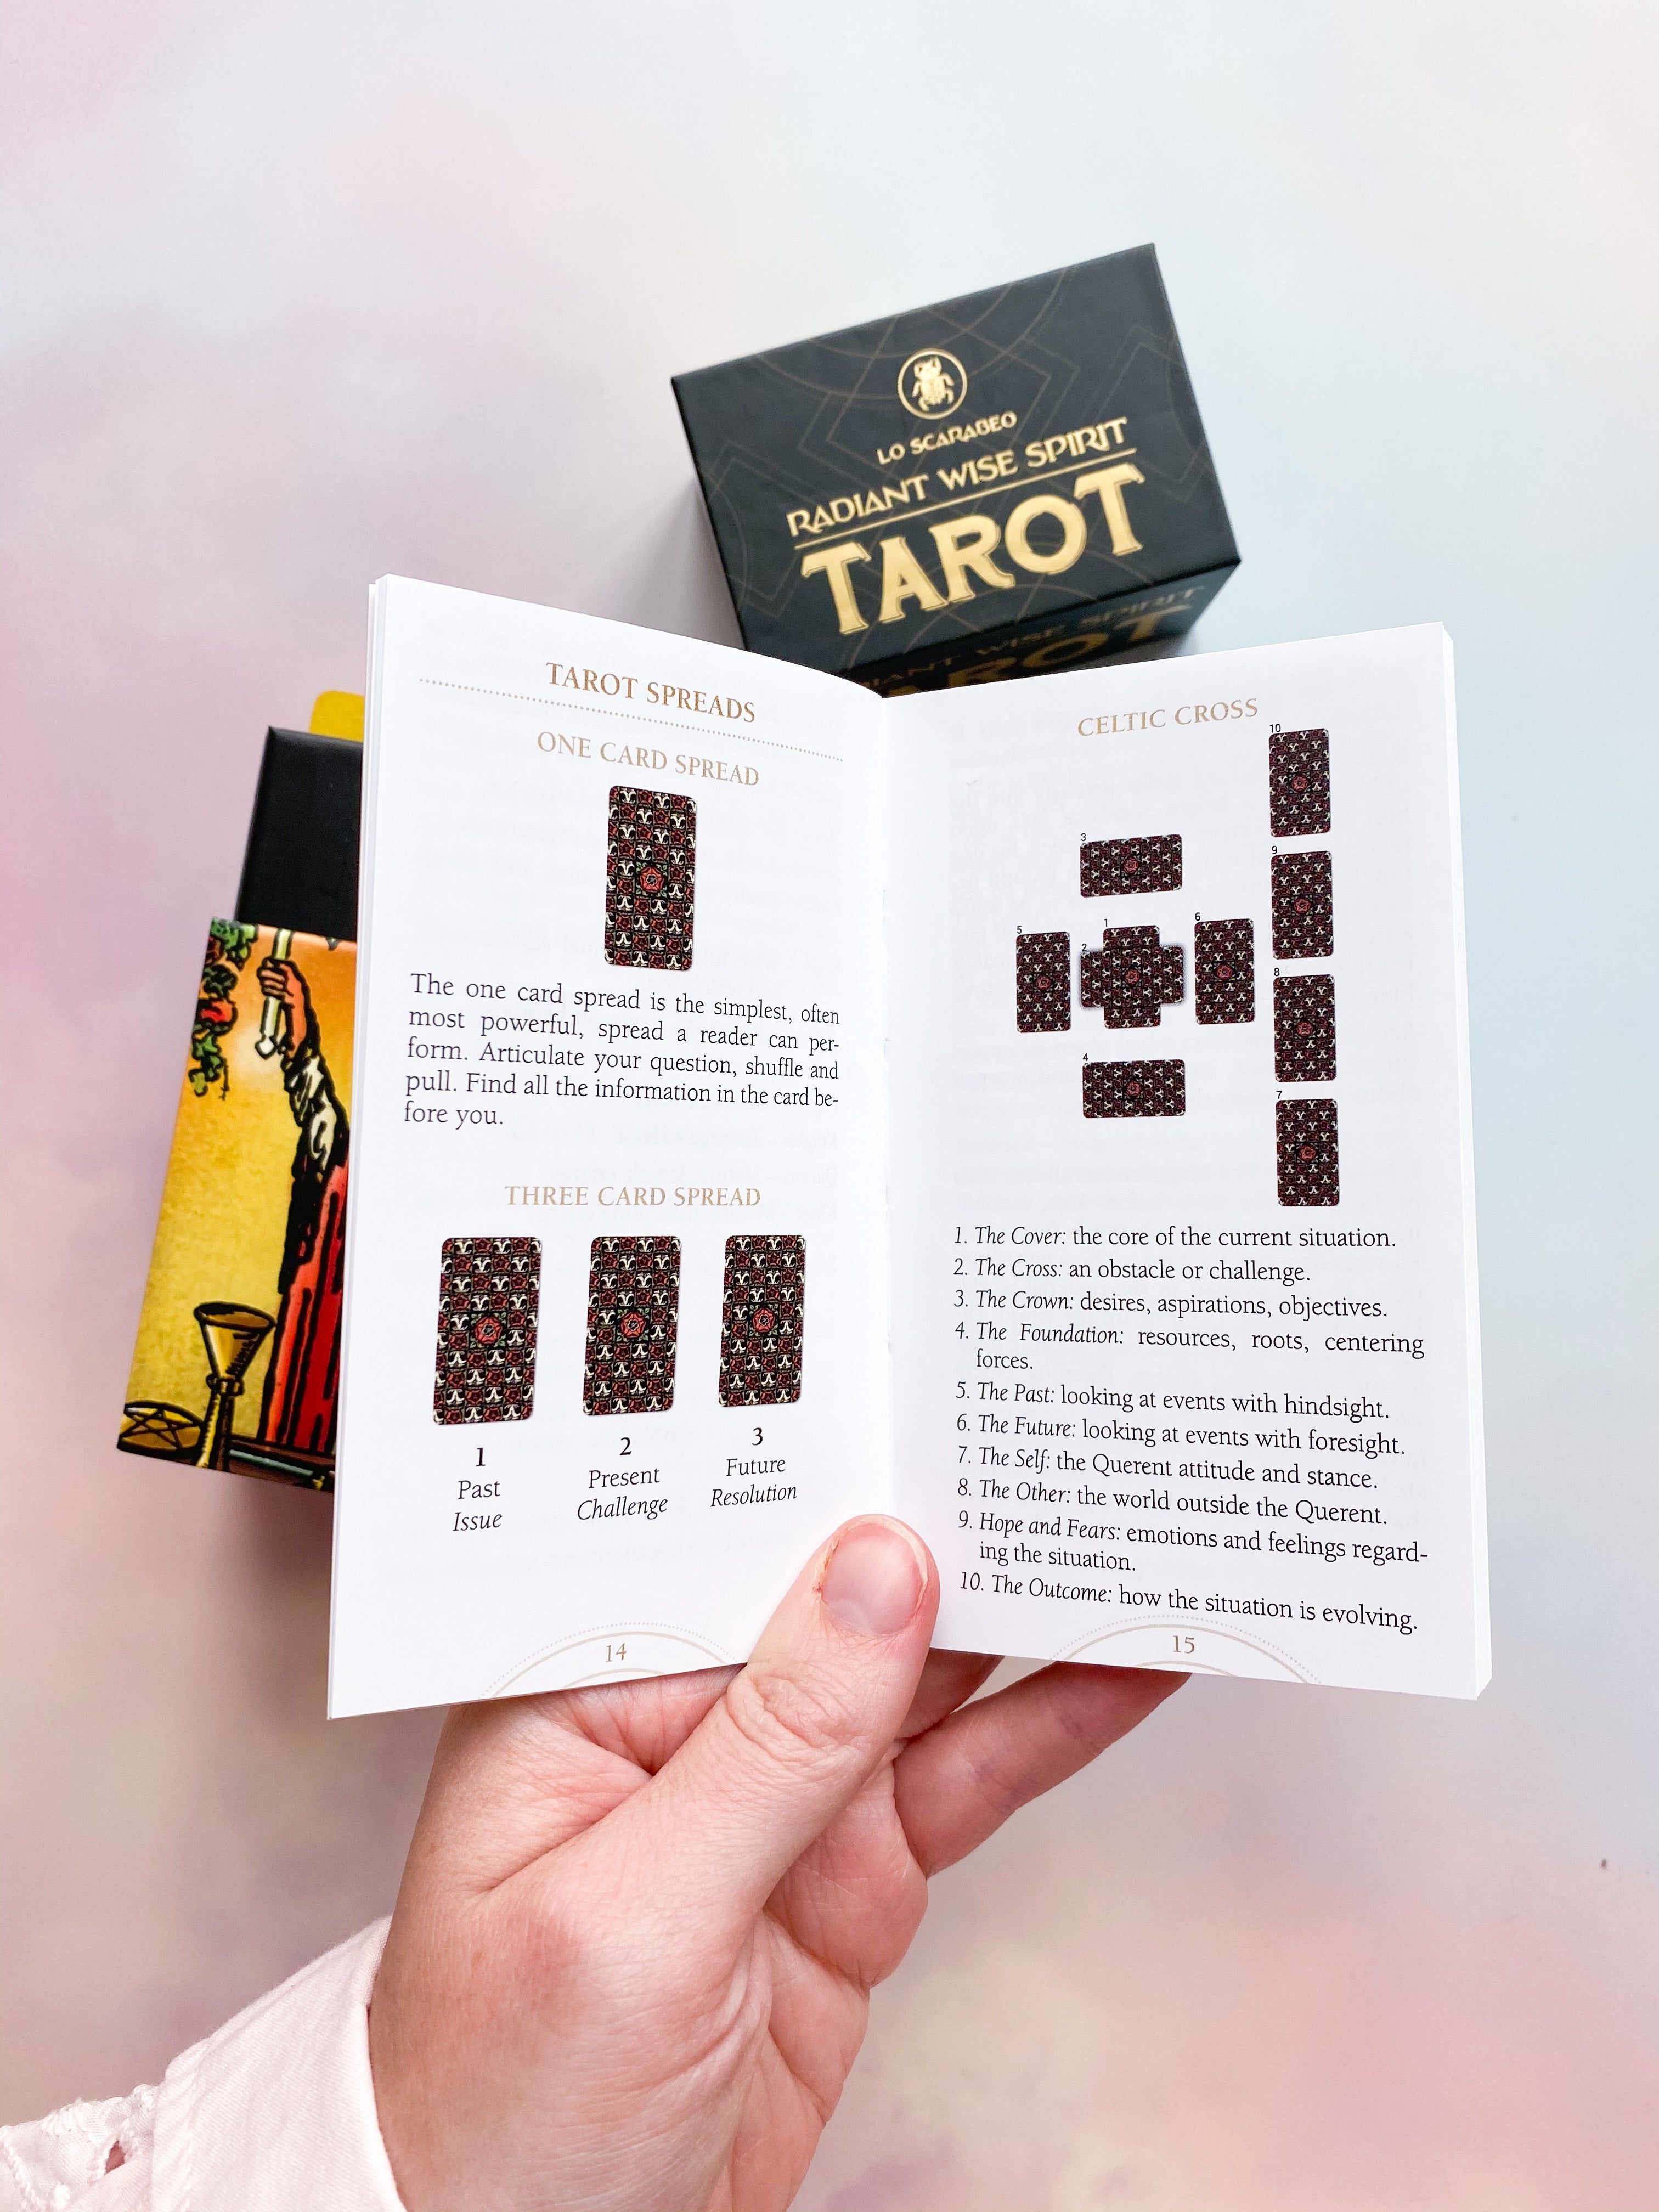 Radiant Wise Spirit Tarot - Lo Scarabeo